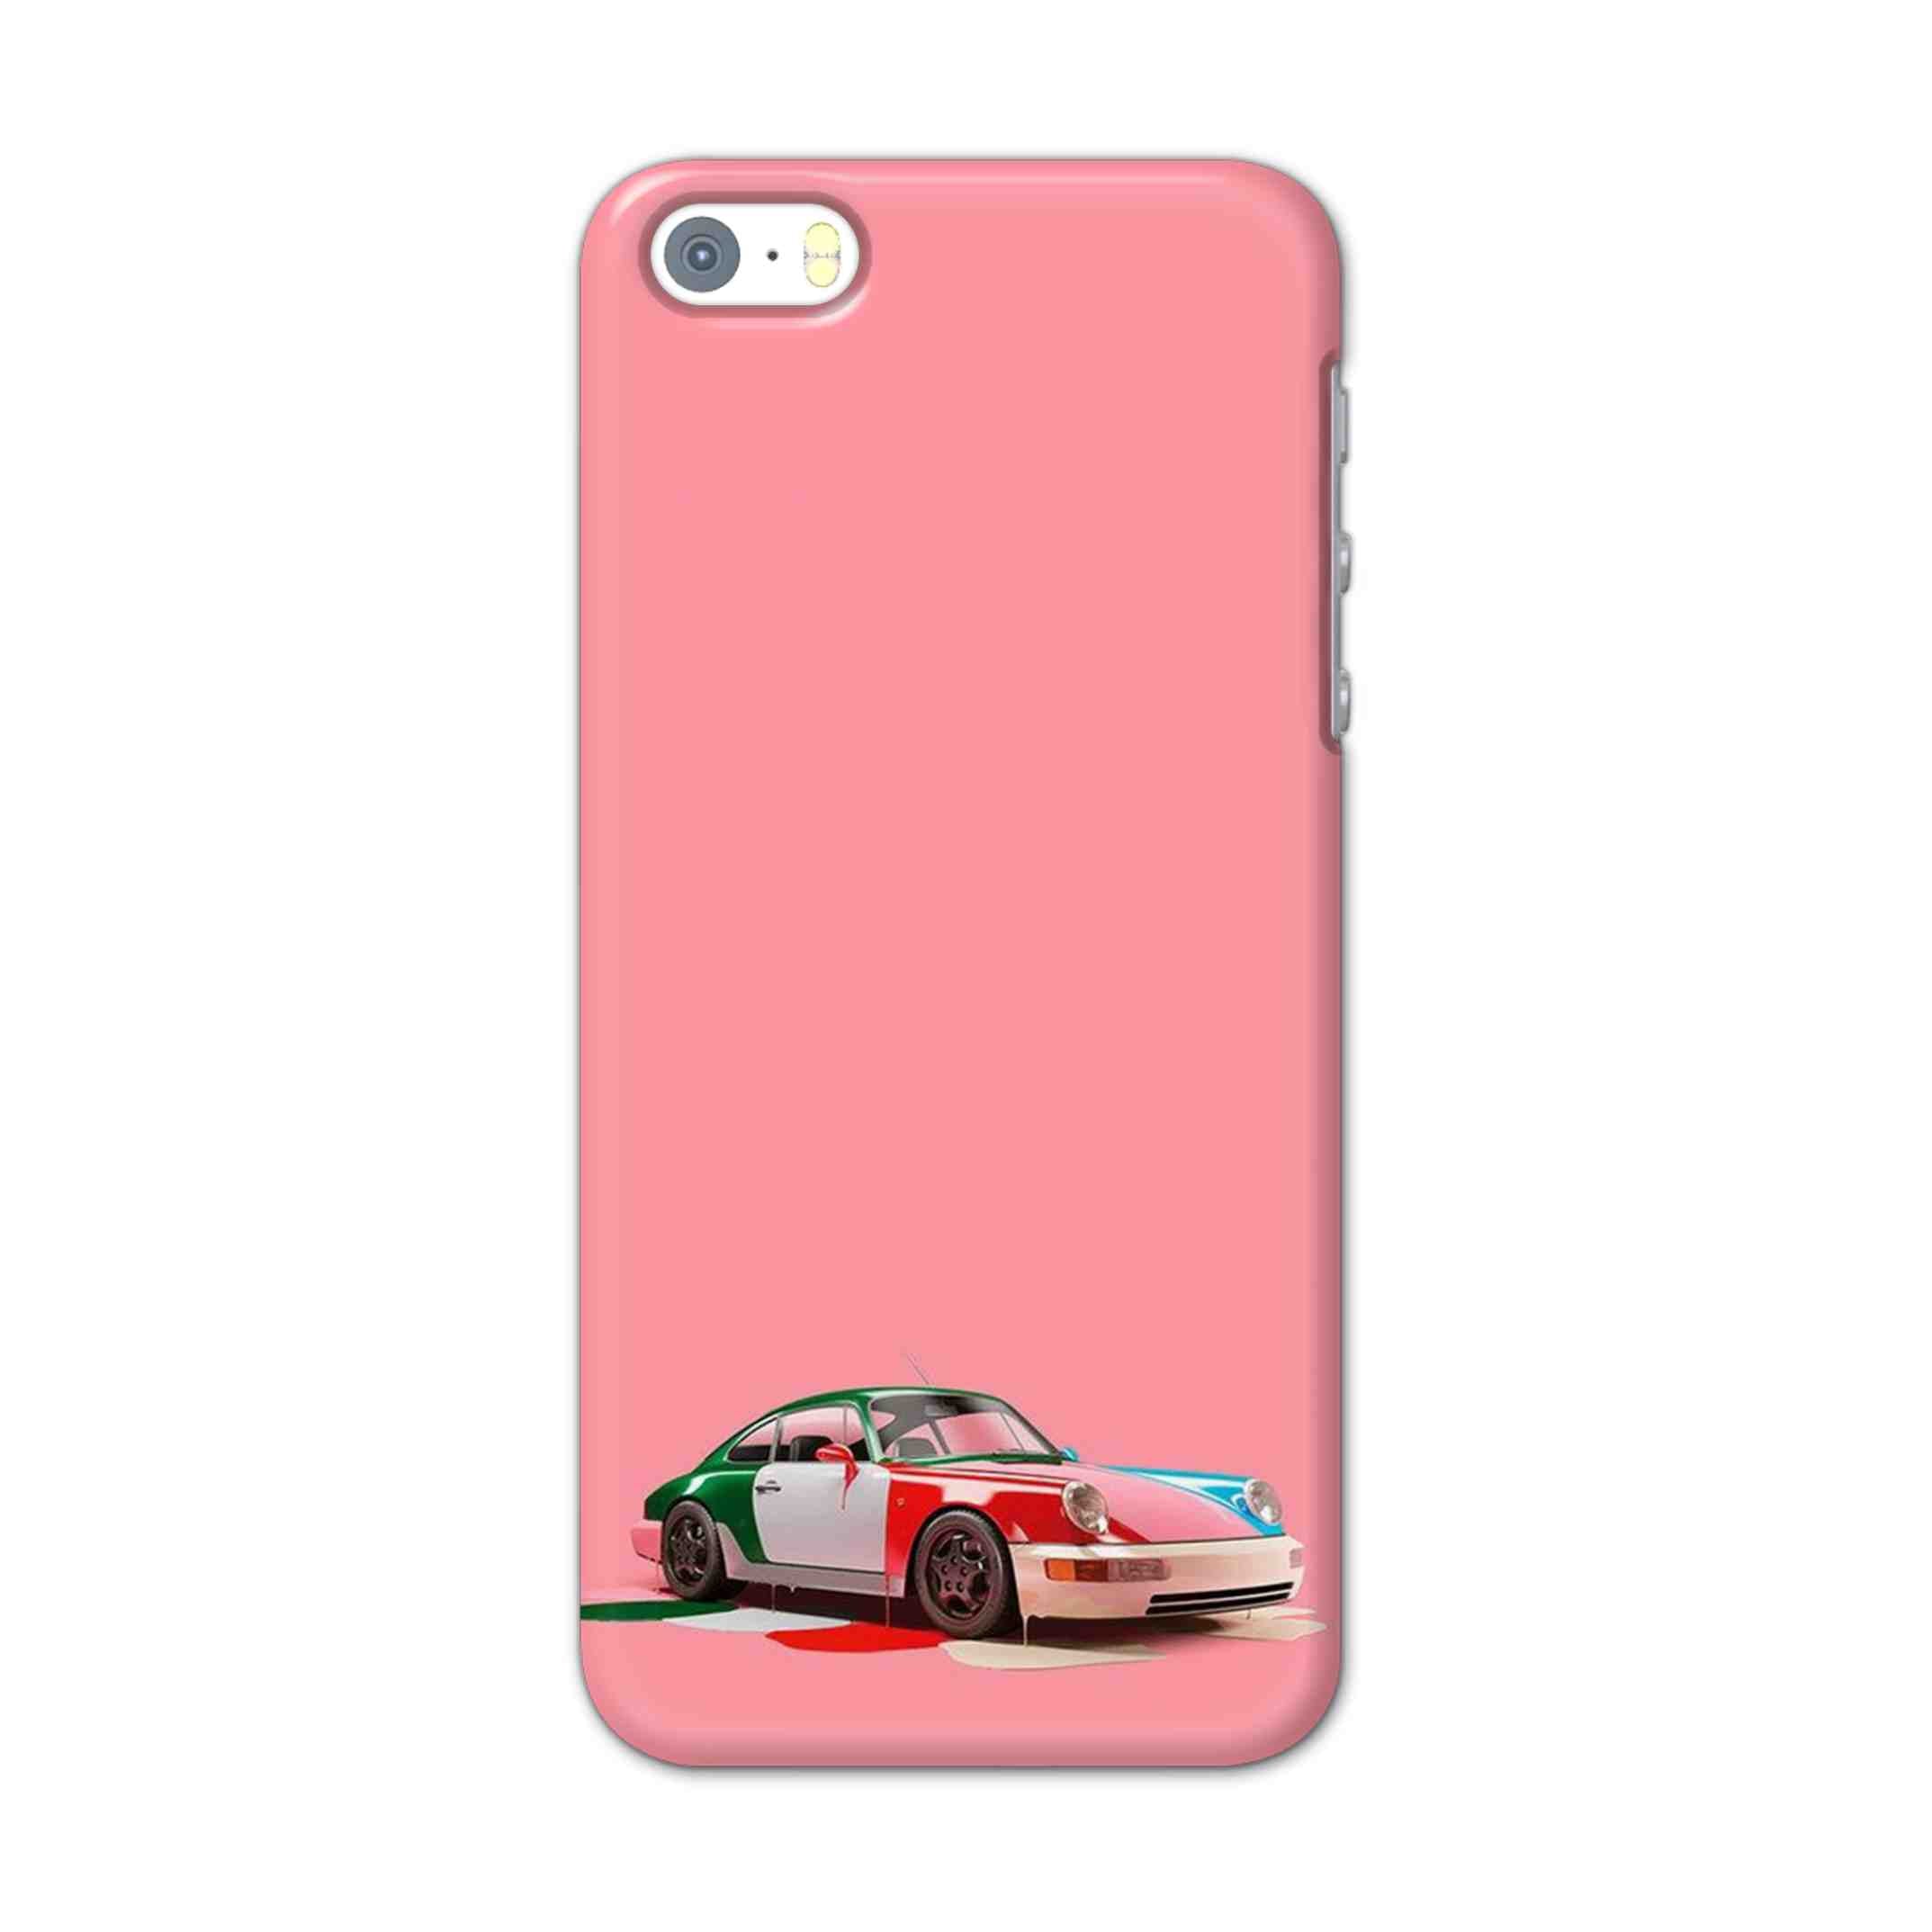 Buy Pink Porche Hard Back Mobile Phone Case/Cover For Apple Iphone SE Online